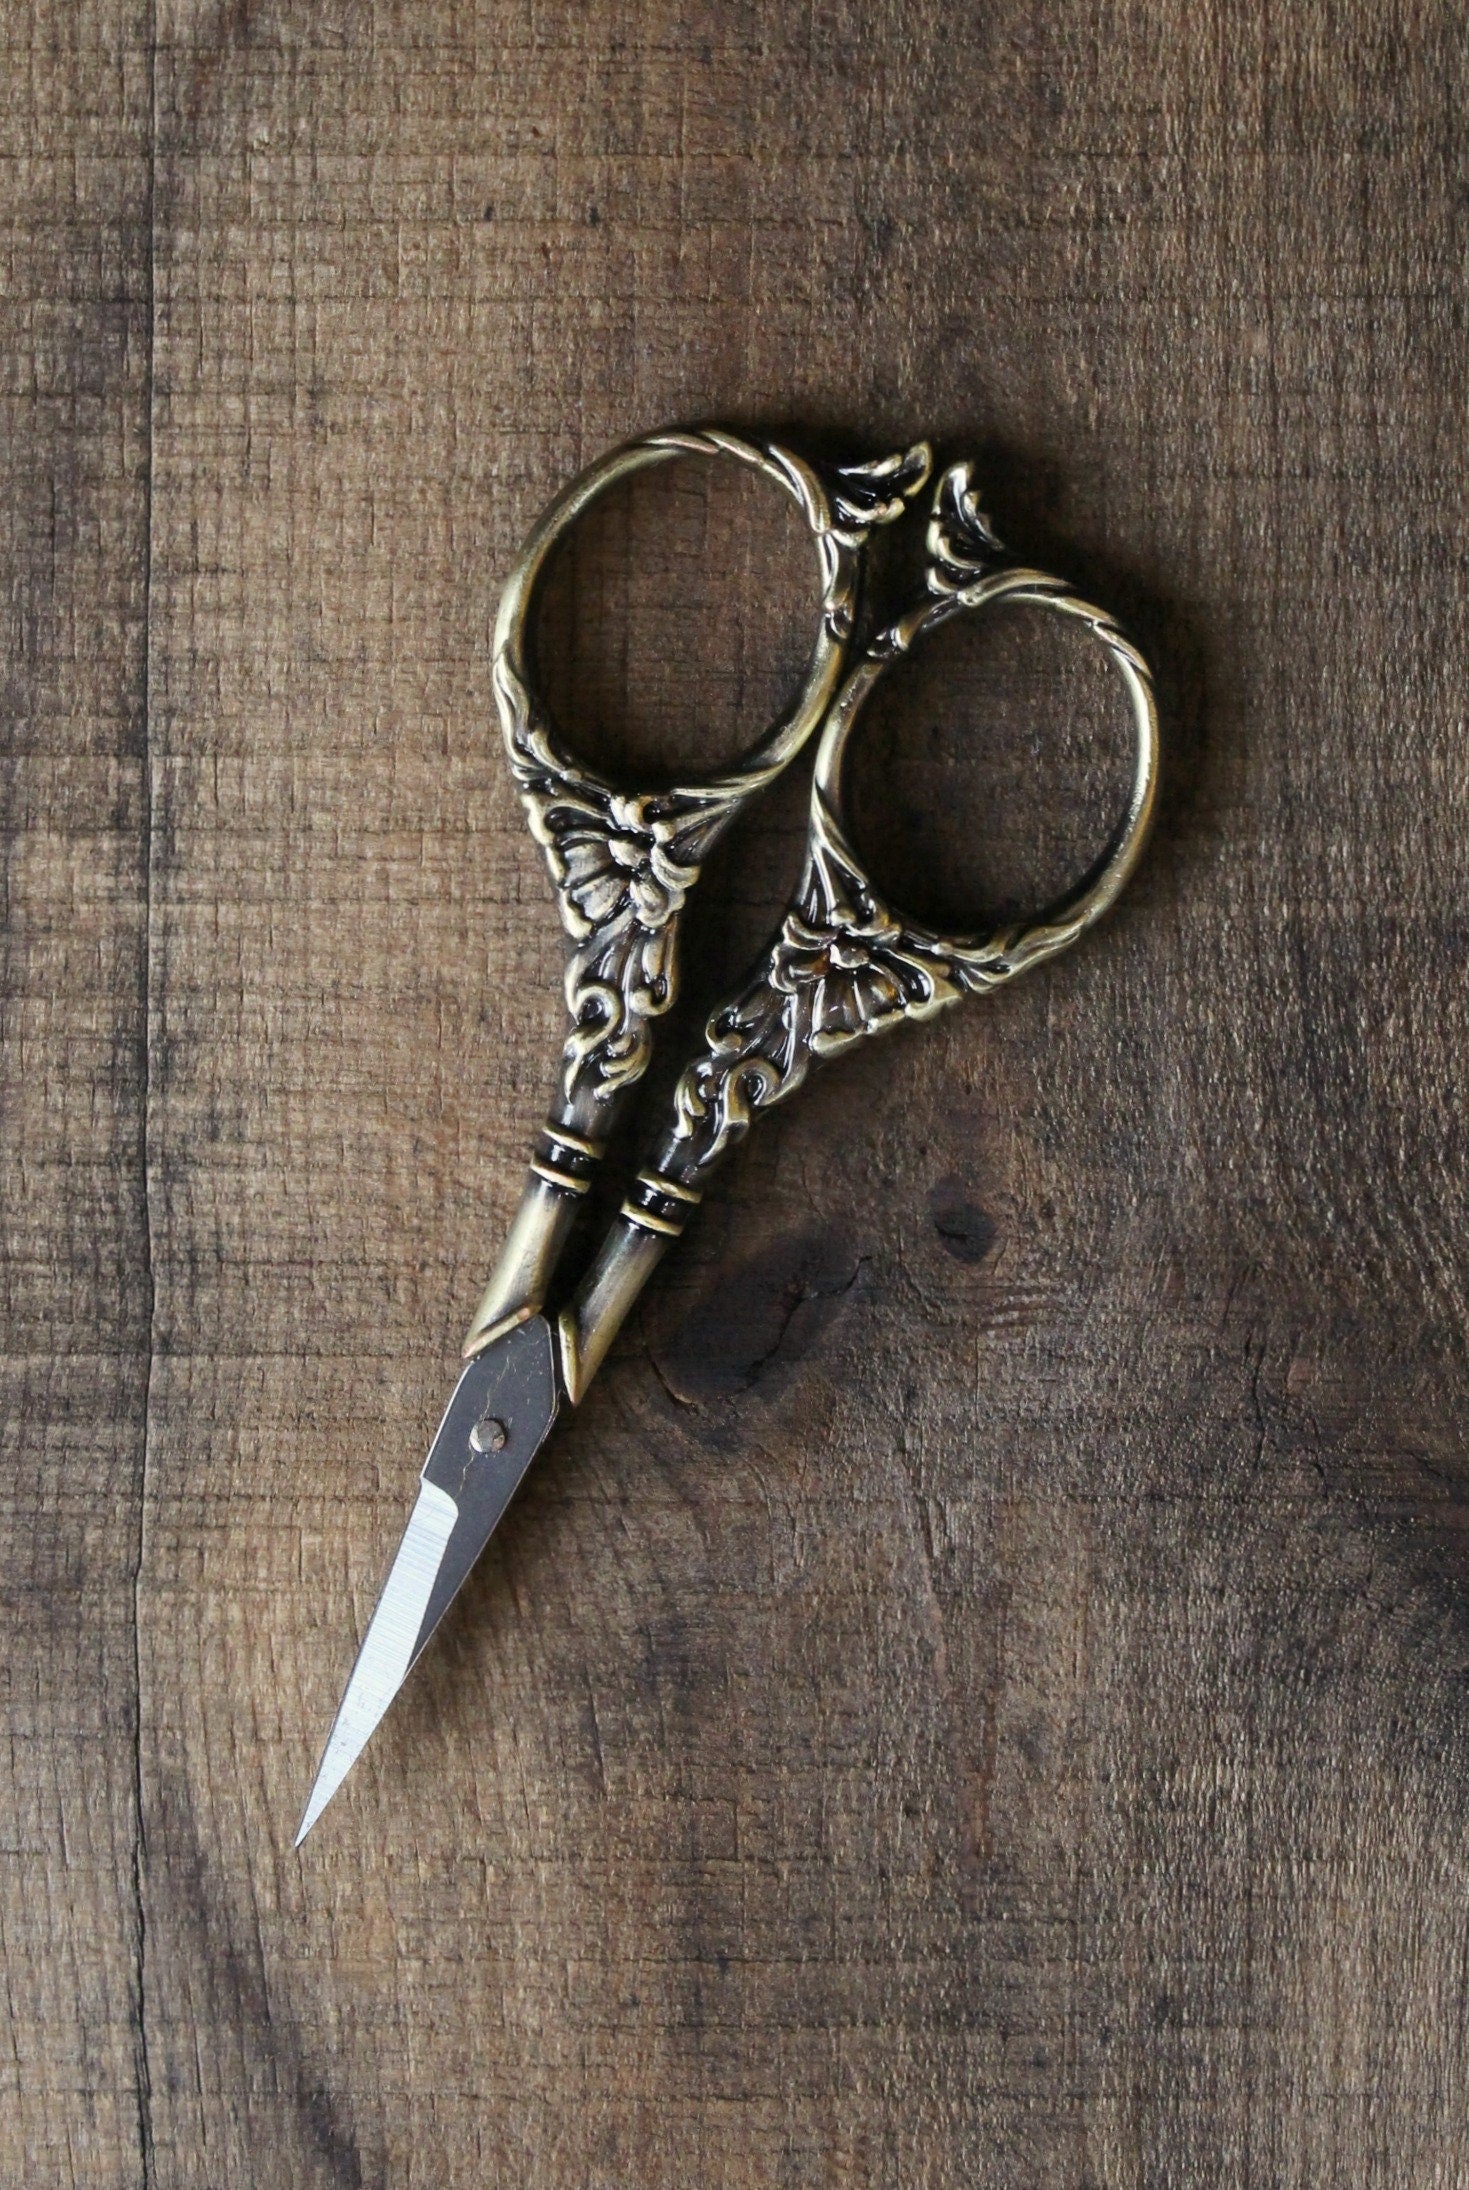 Mini Embroidery Scissors – Never Not Knitting